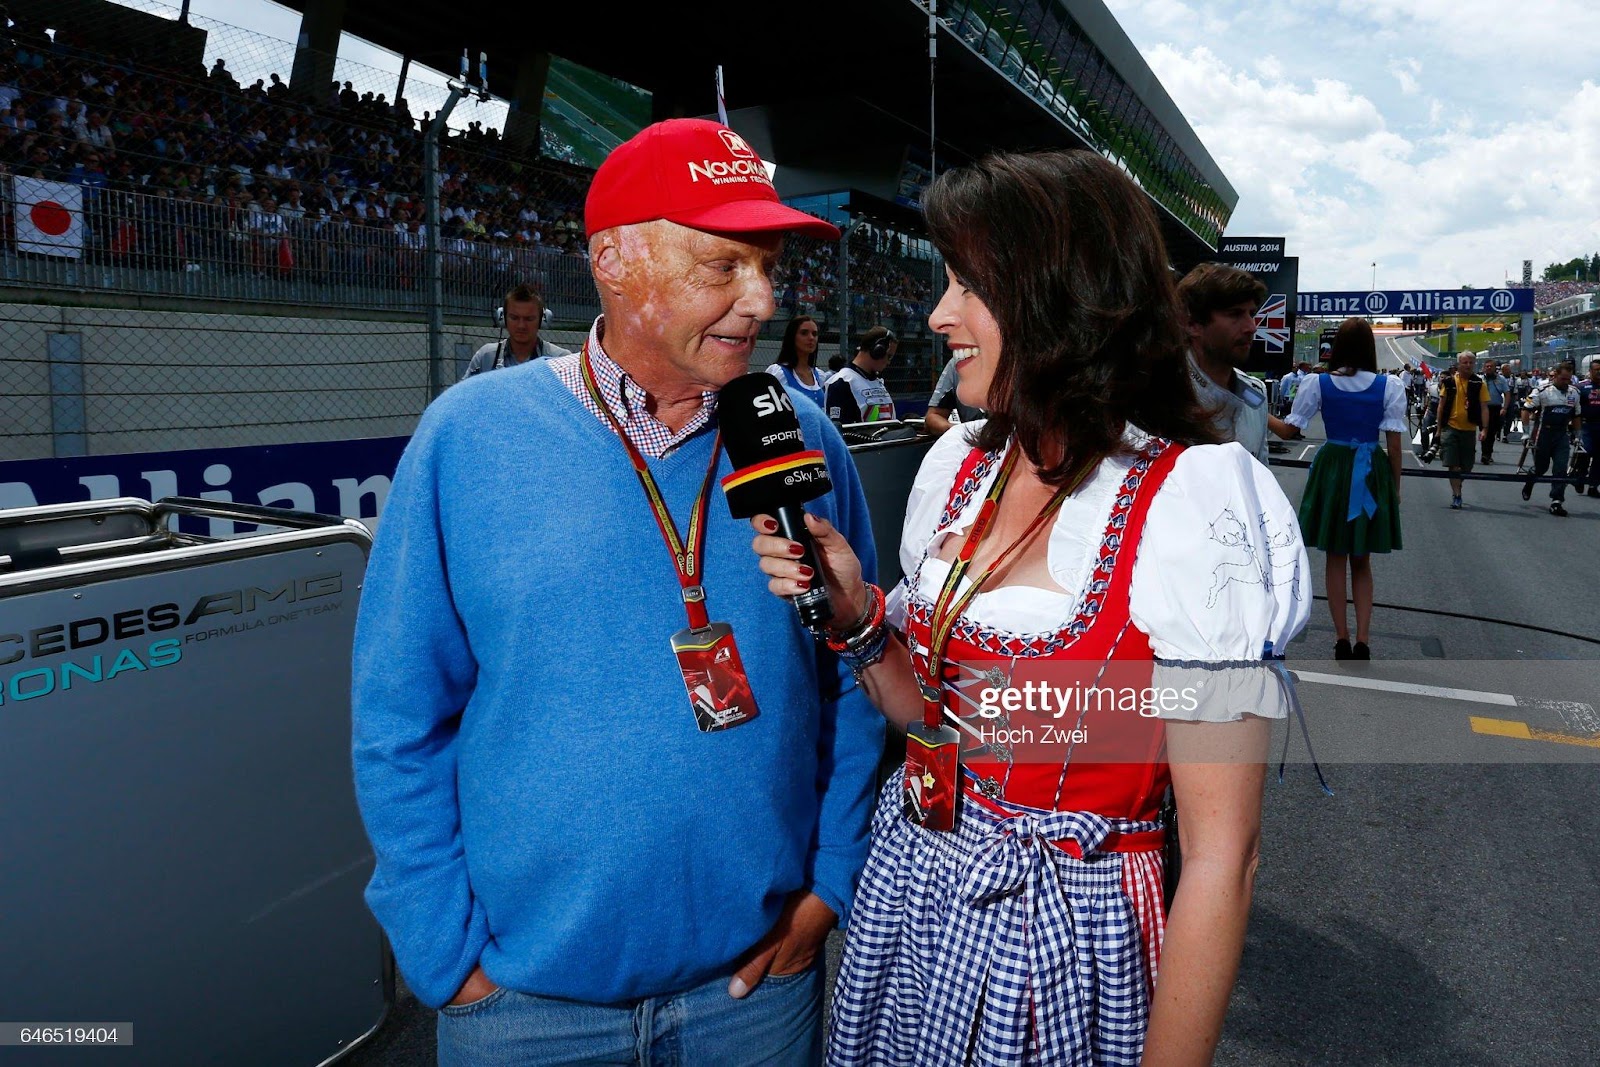 Niki Lauda being interviewed